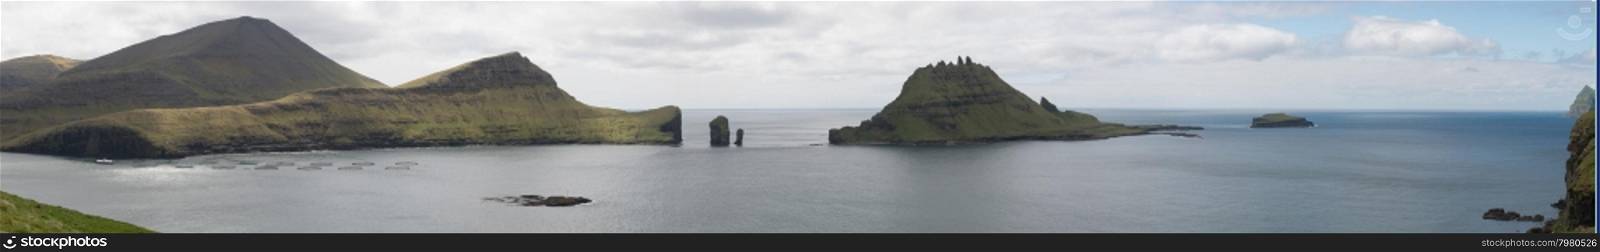 Panorama of Vagar, Gasholmur and Tindholmur on the Faroe Islands with salmon farm